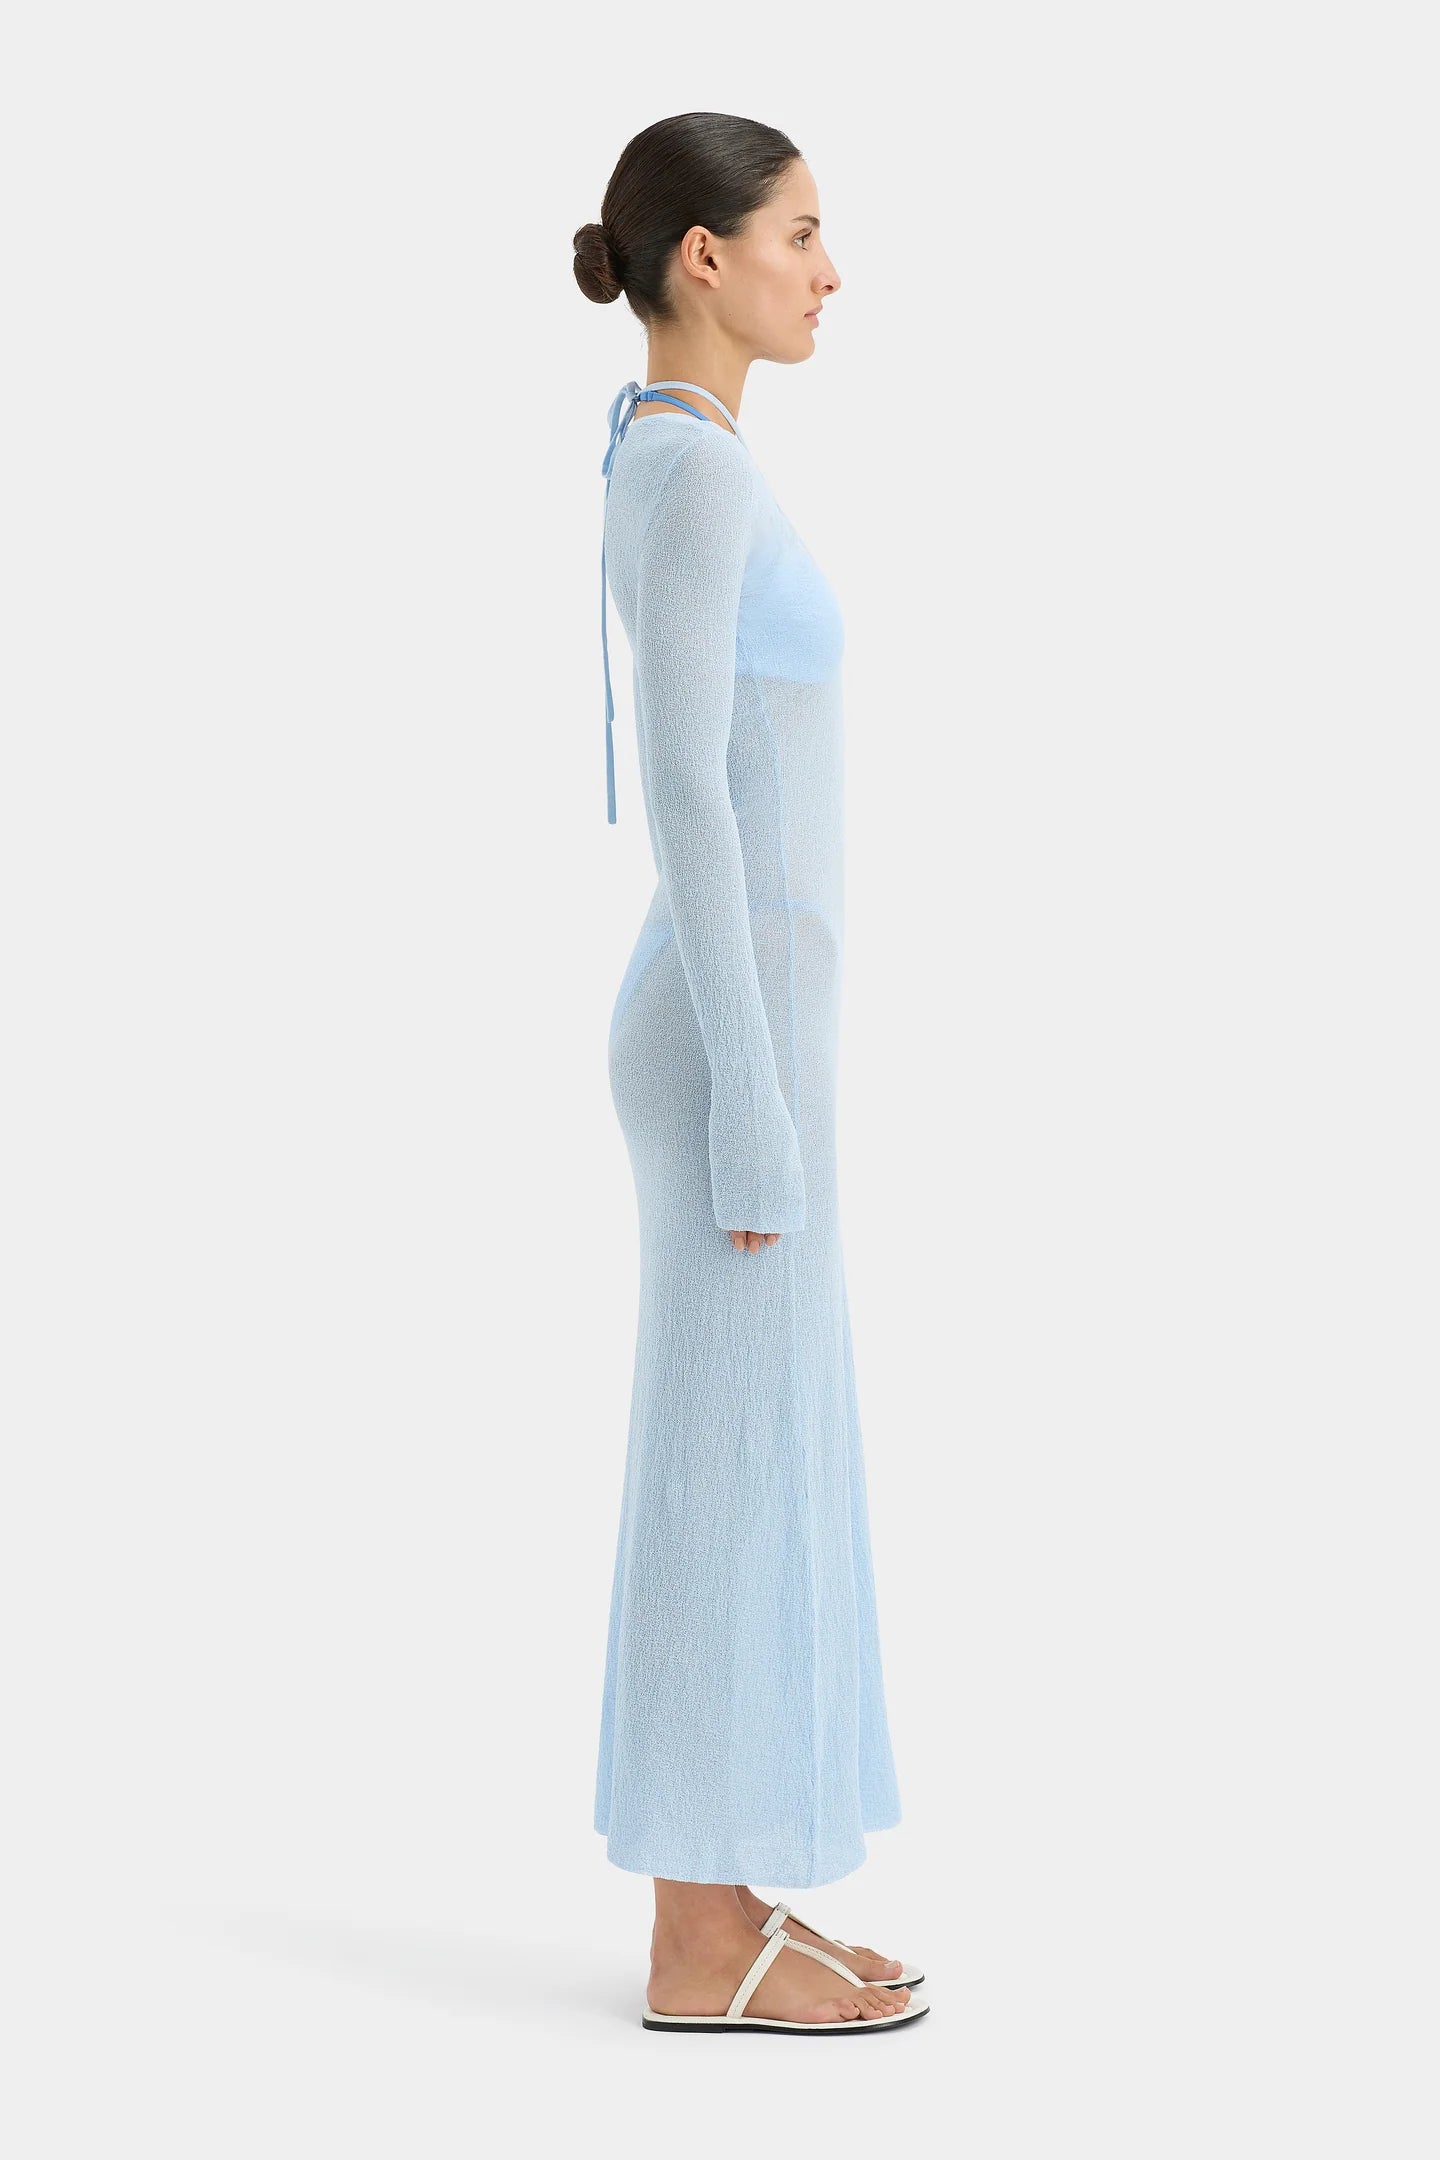 Emmeline Halter Long Sleeve Dress - Sky Blue